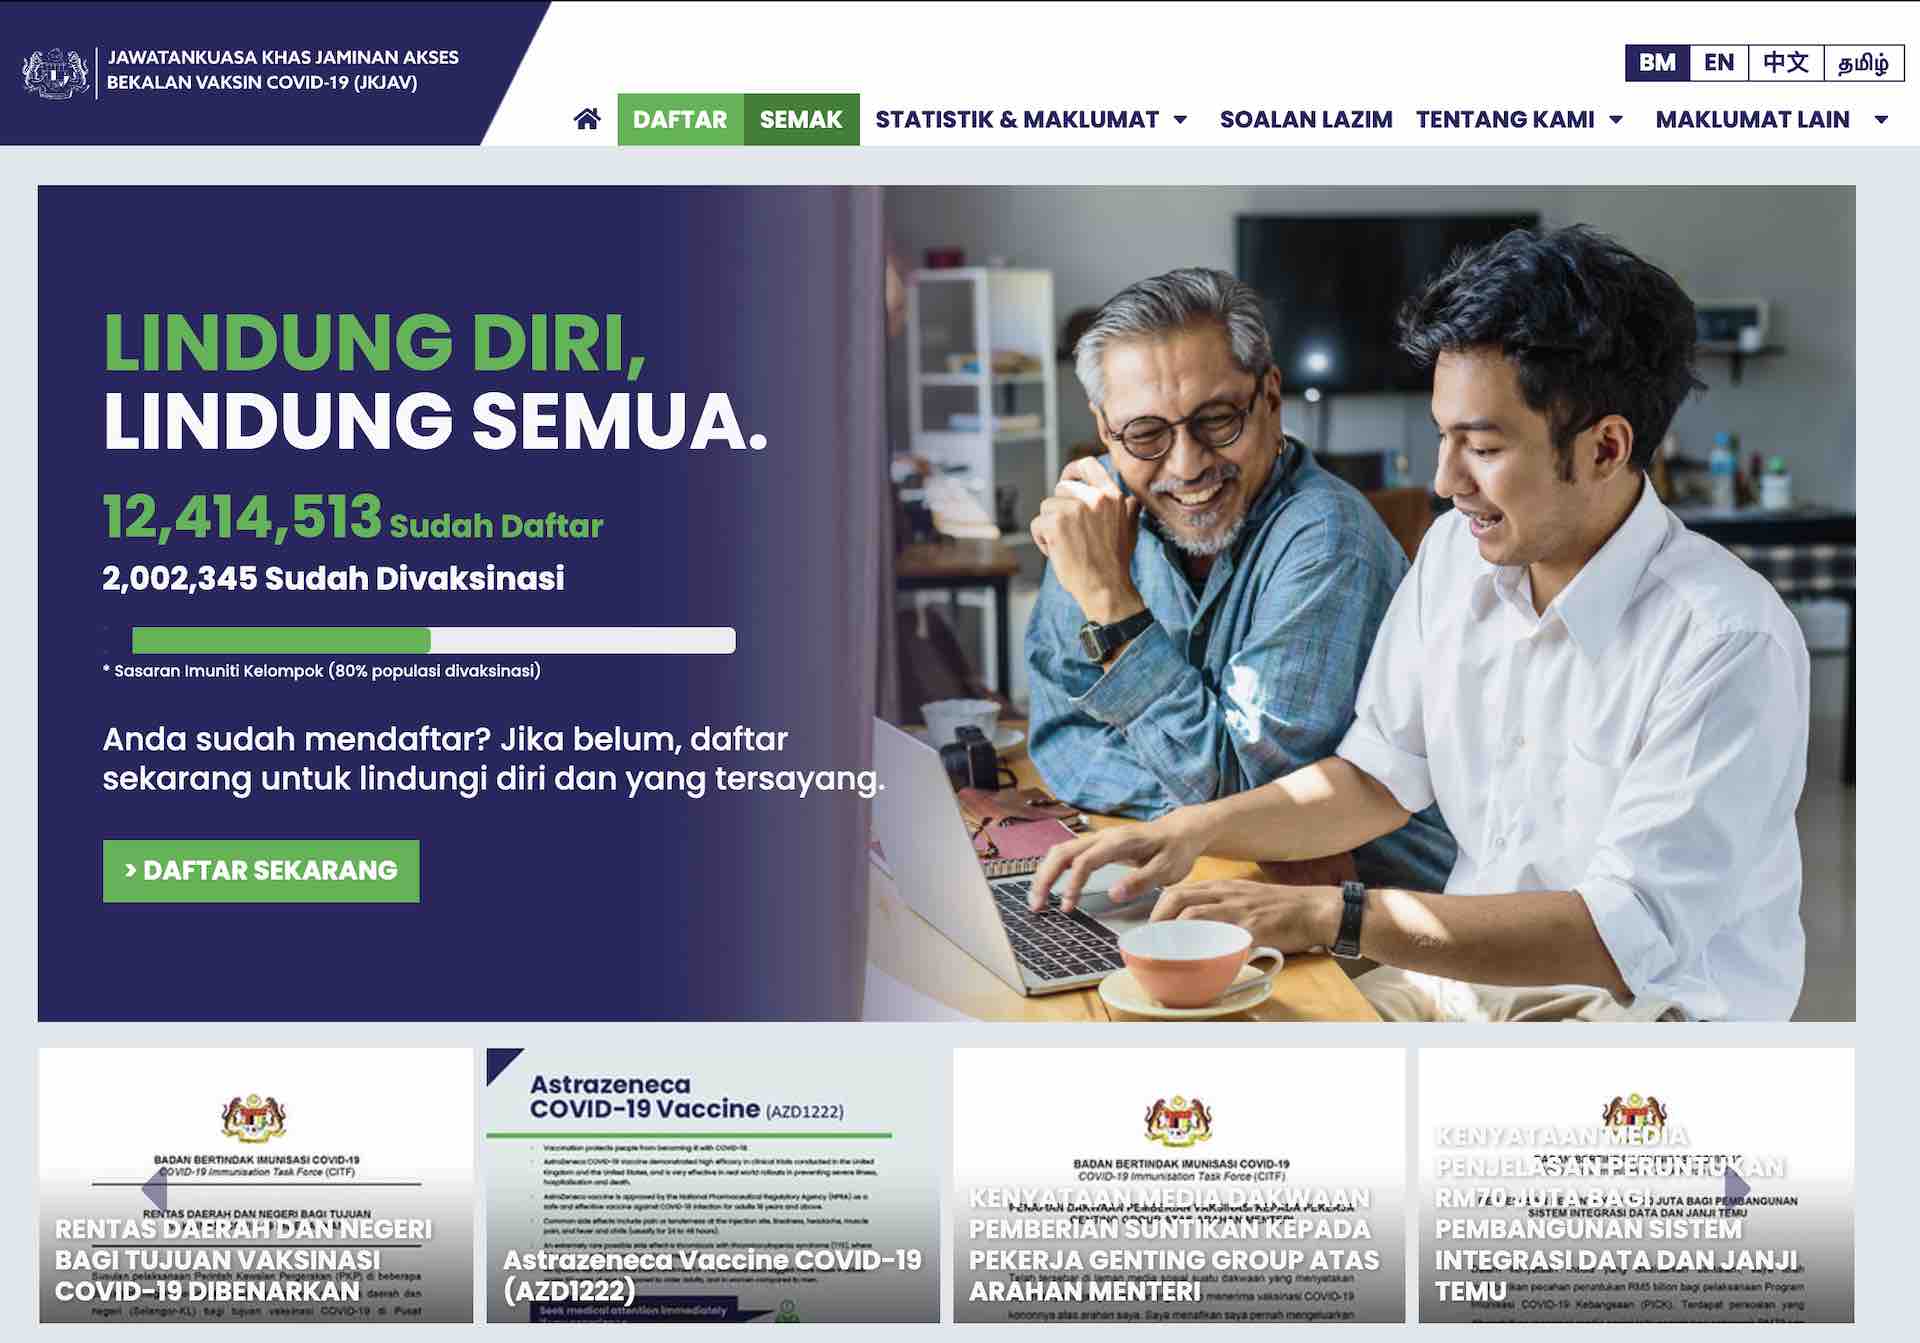 Astrazeneca register malaysia